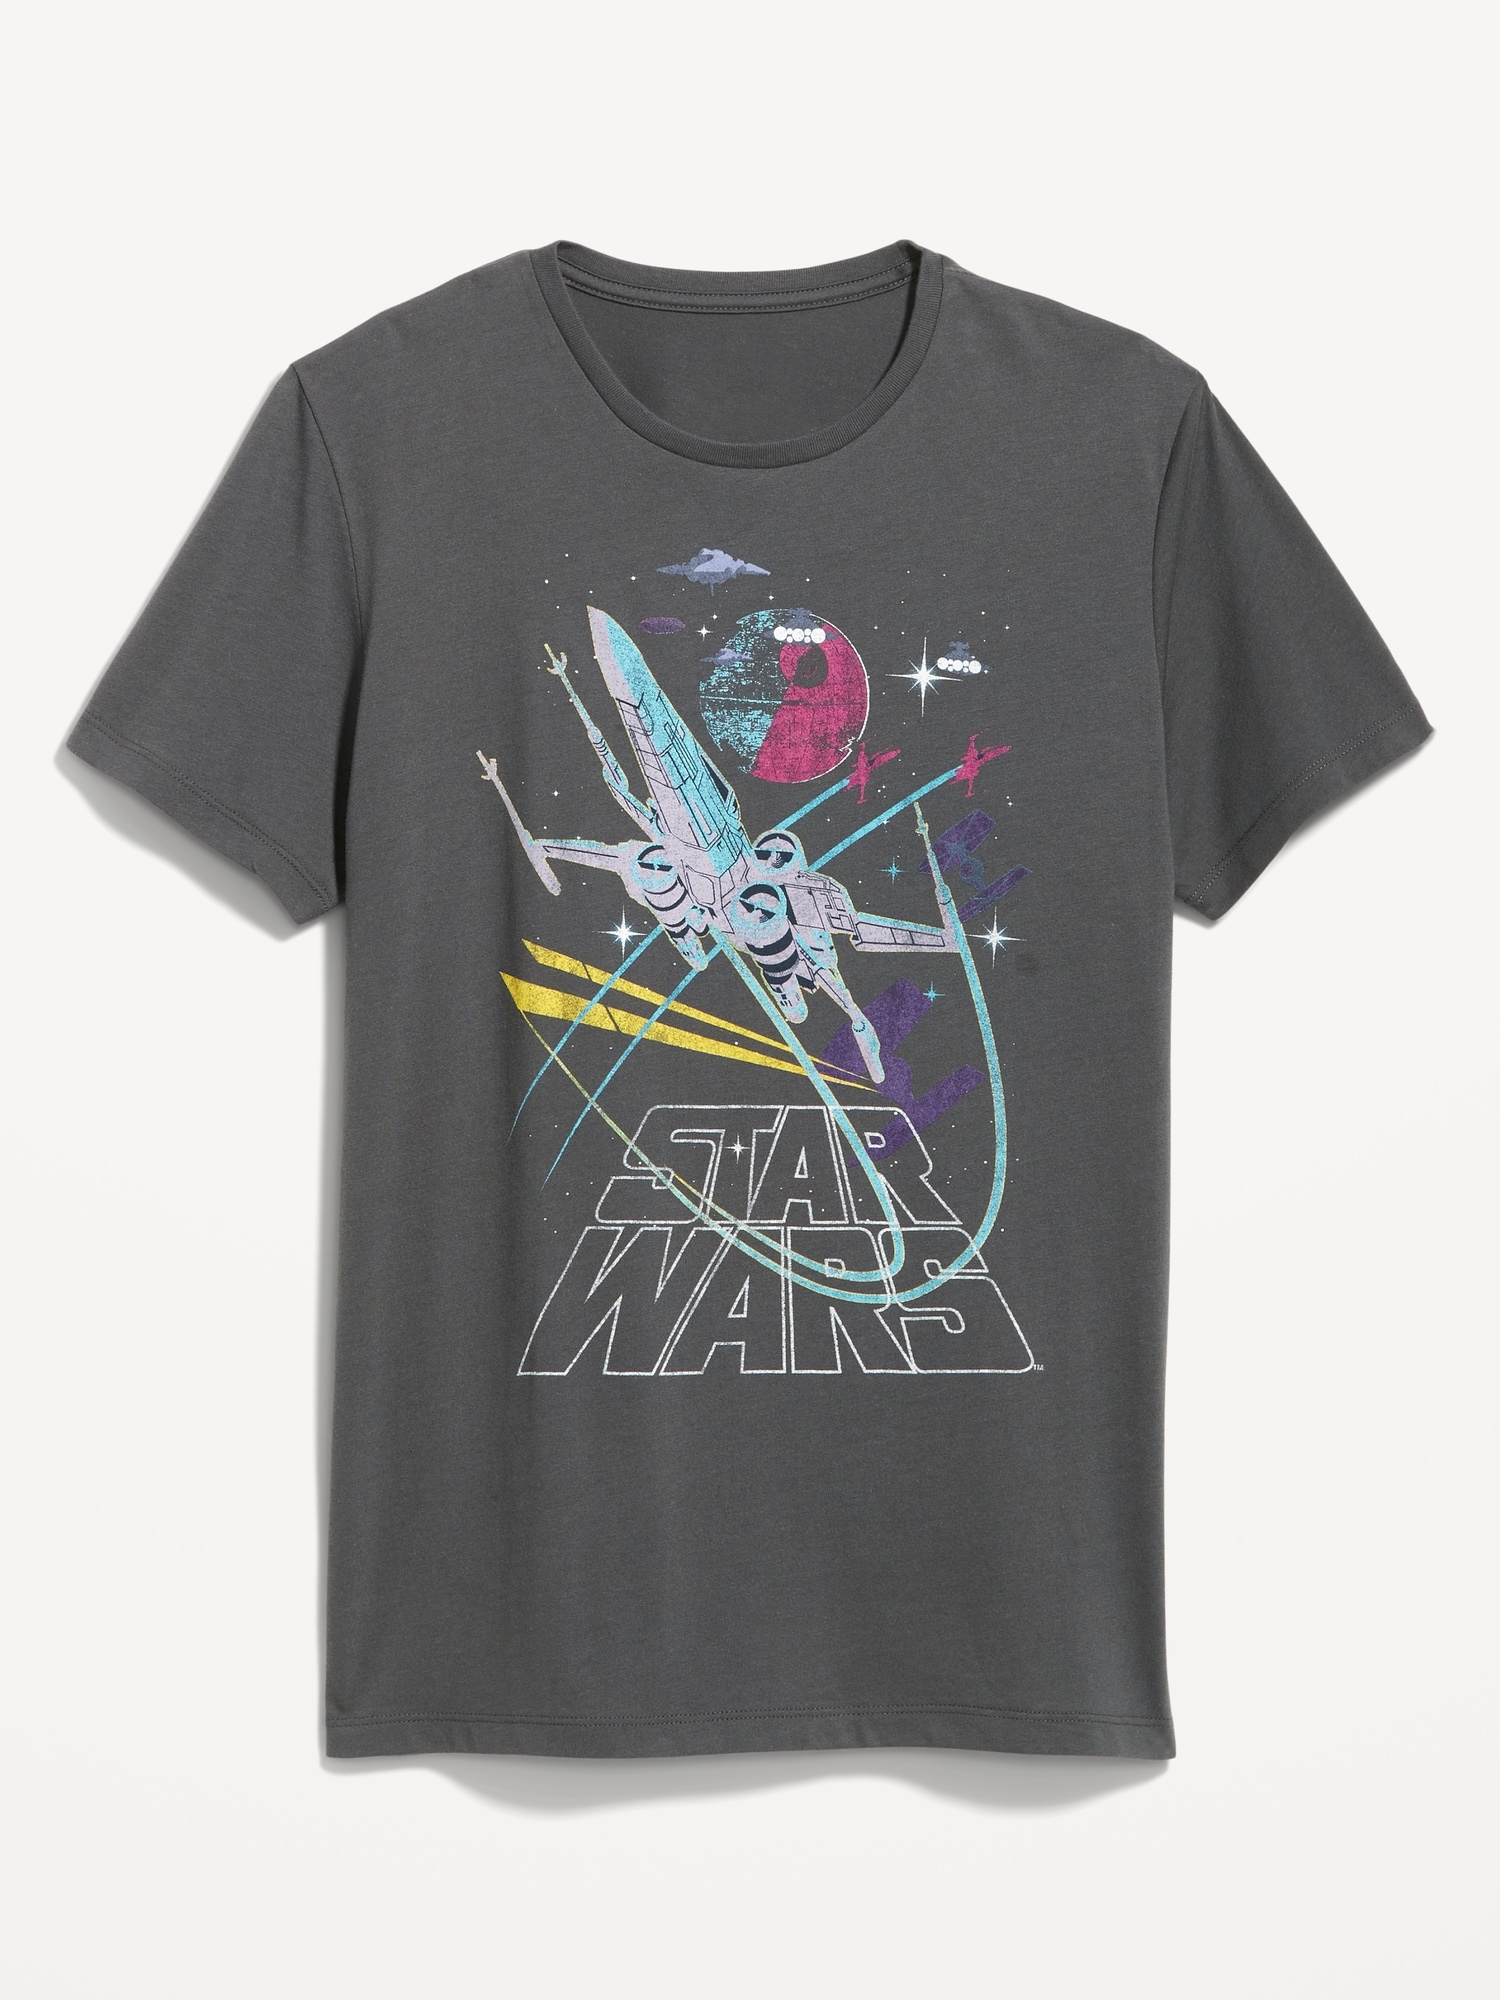 Old Navy Star Wars™ Gender-Neutral T-Shirt for Adults black. 1